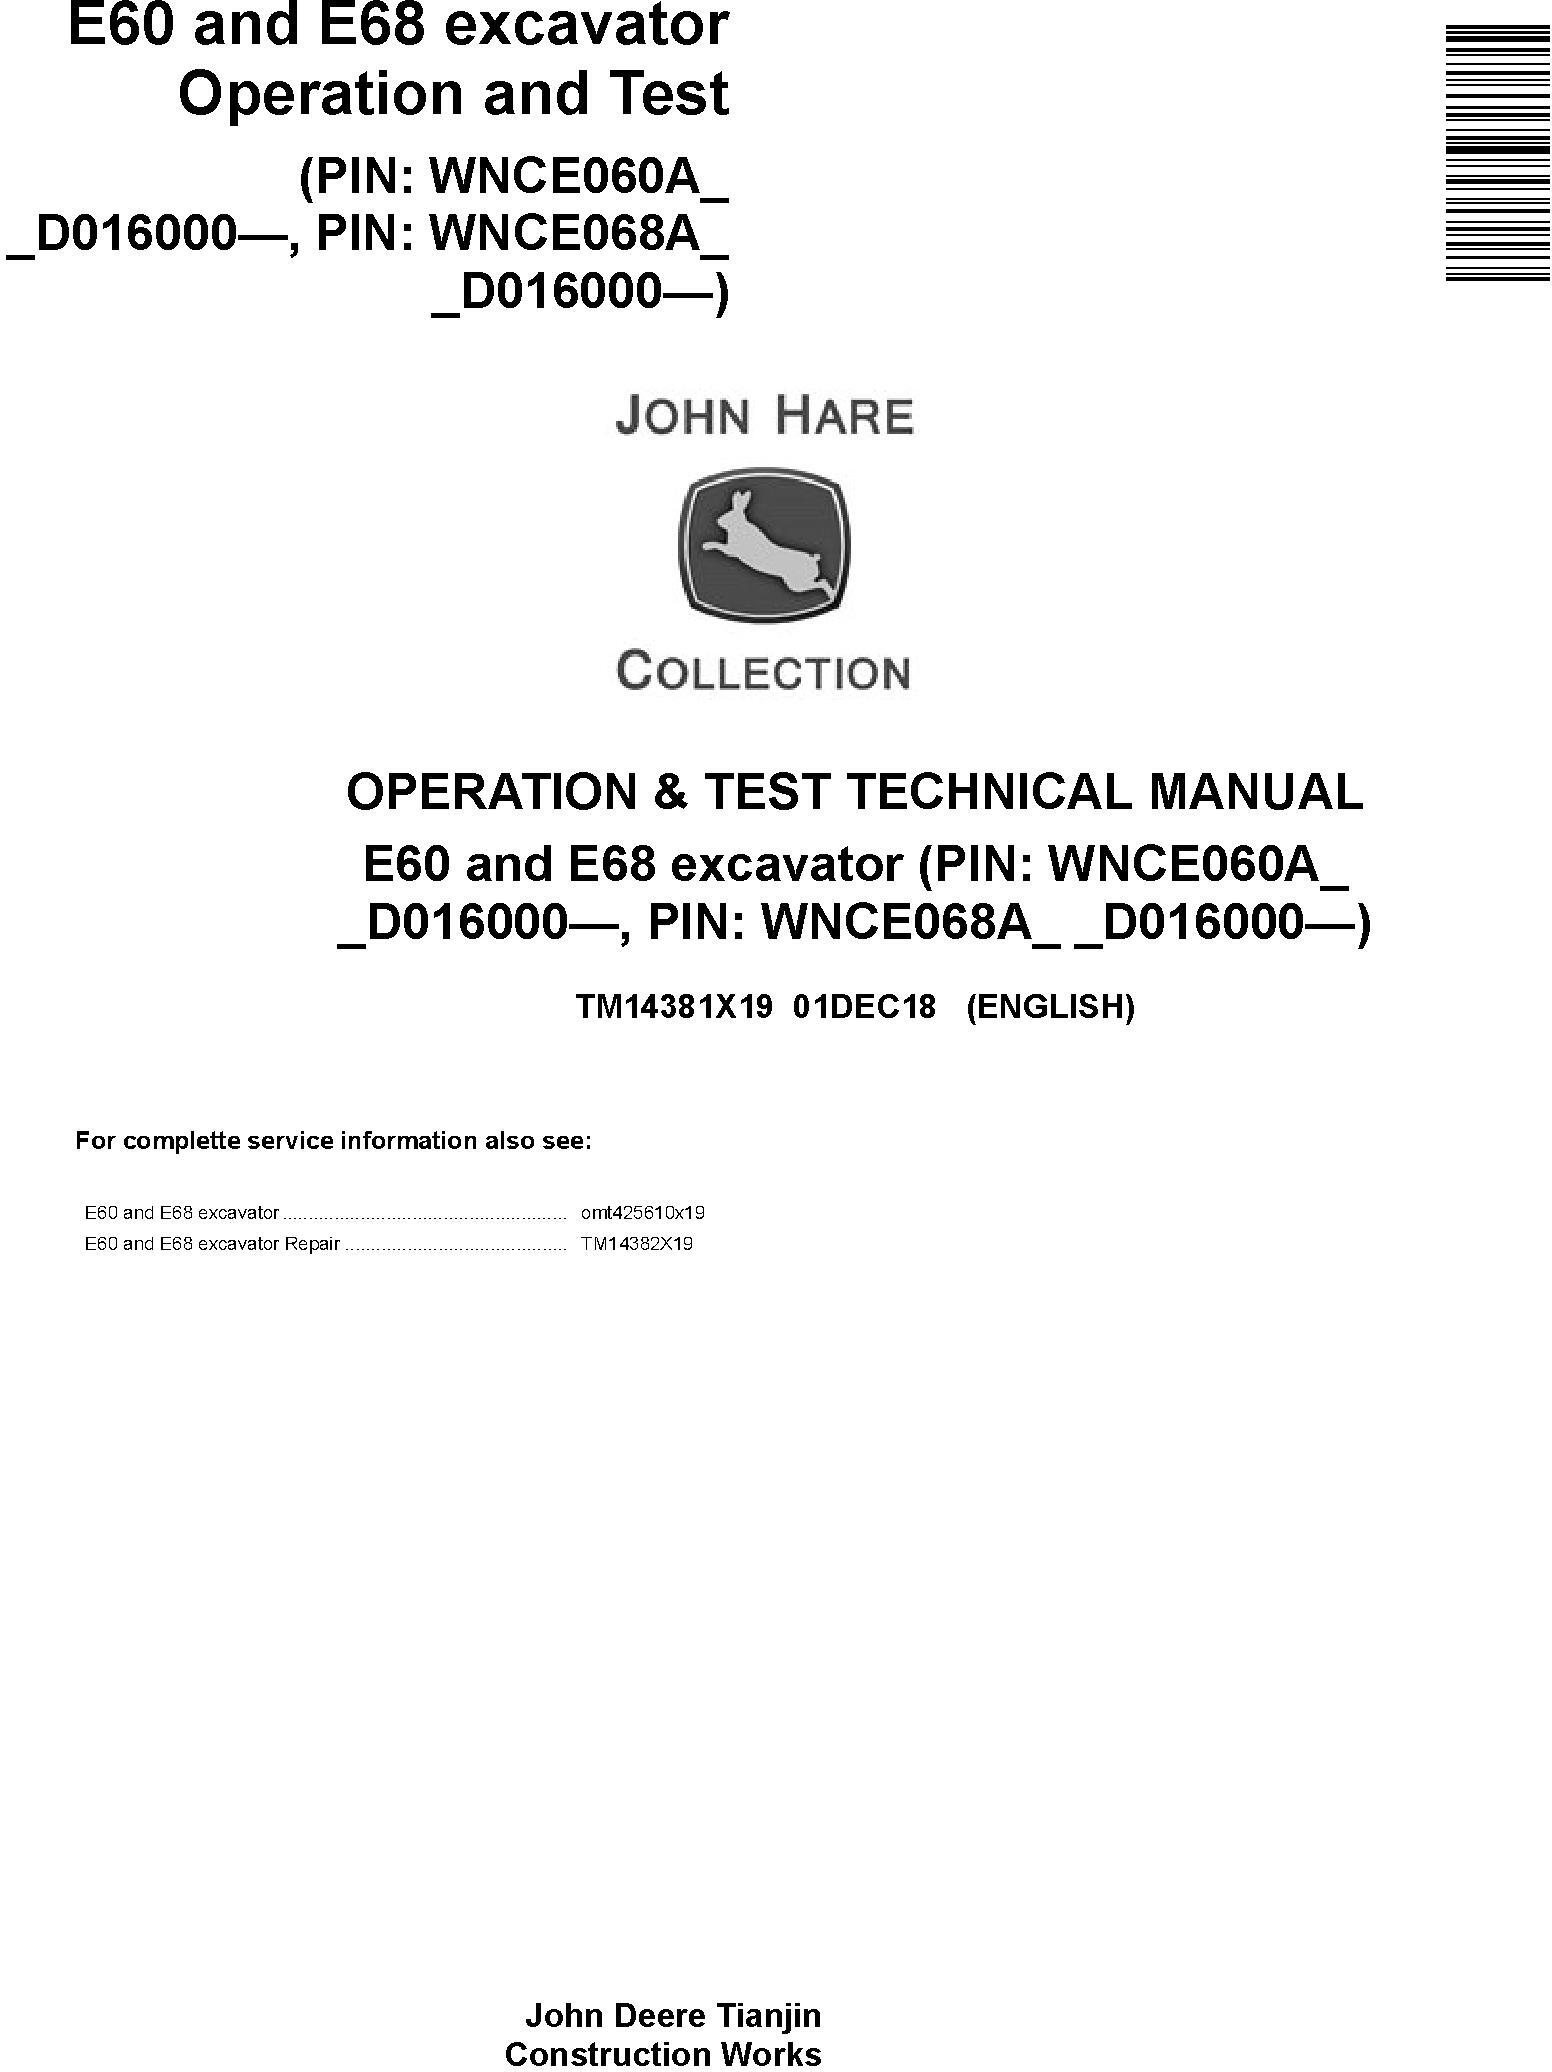 John Deere E60 E68 Excavator Operation Test Technical Manual TM14381X19